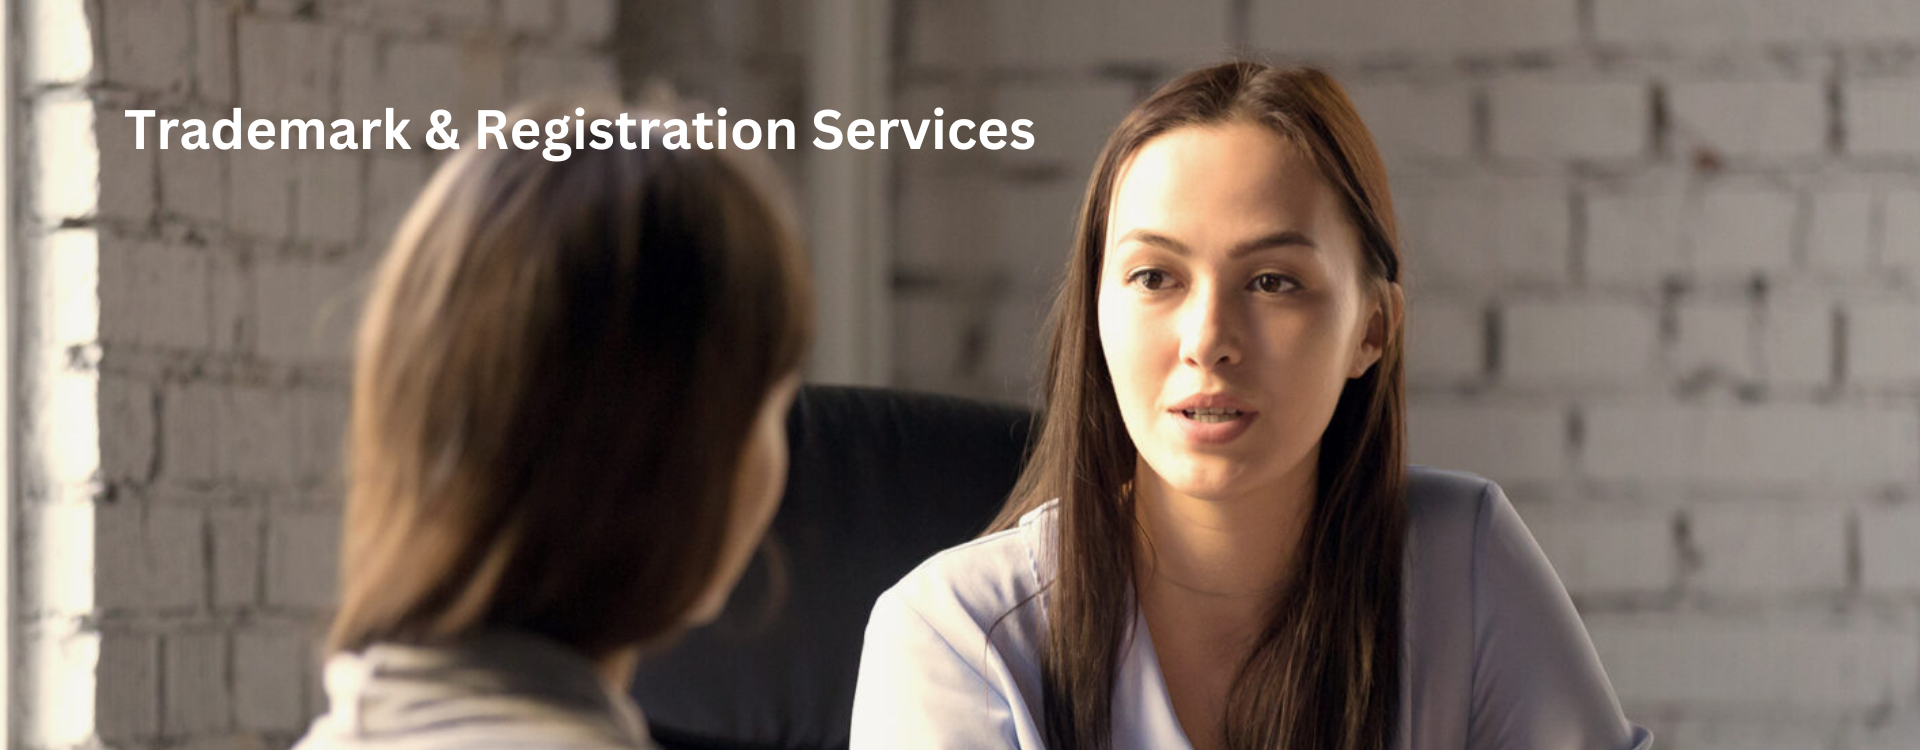 Trademark and Registration Services in Dubai